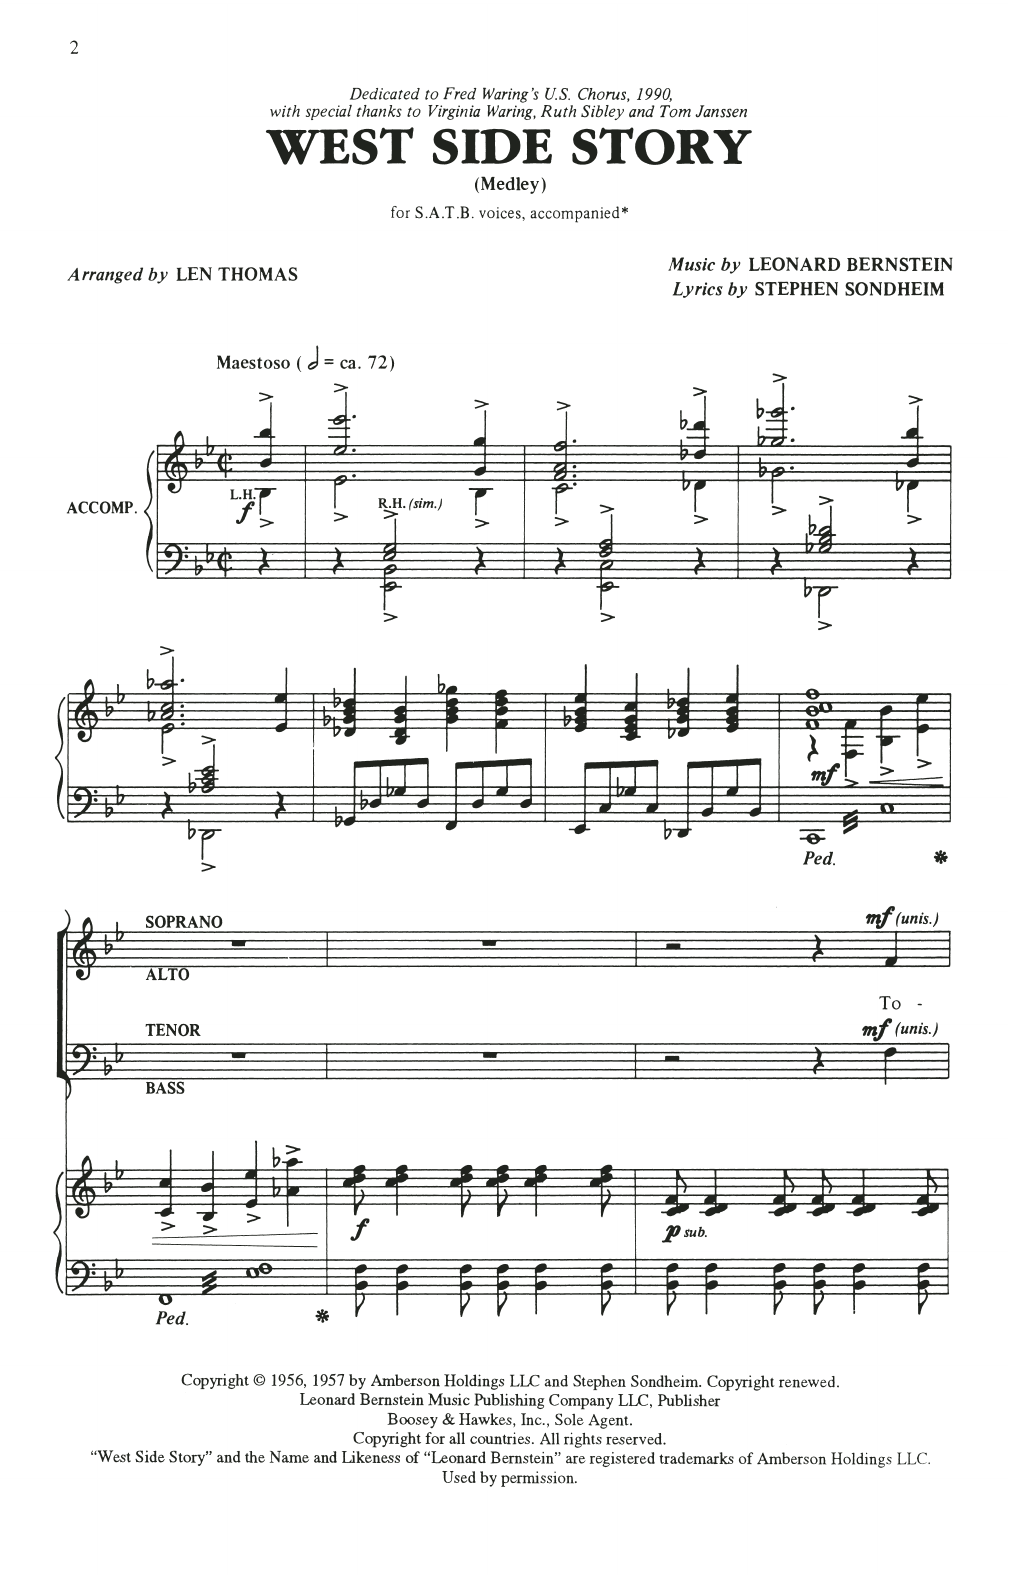 Leonard Bernstein & Stephen Sondheim Choral Medley from West Side Story (arr. Len Thomas) Sheet Music Notes & Chords for SATB Choir - Download or Print PDF